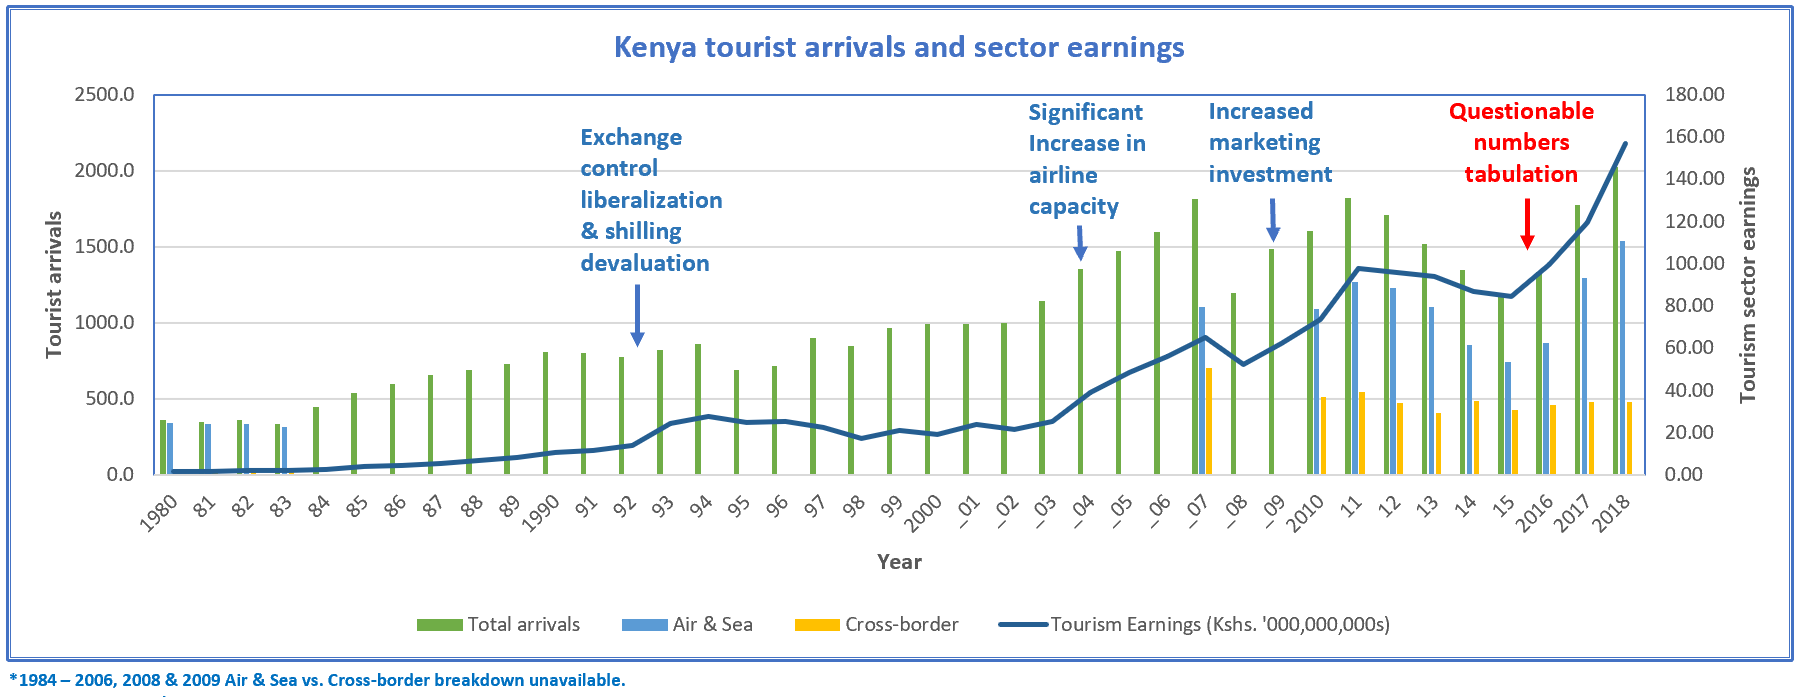 kenya tourism statistics 2021